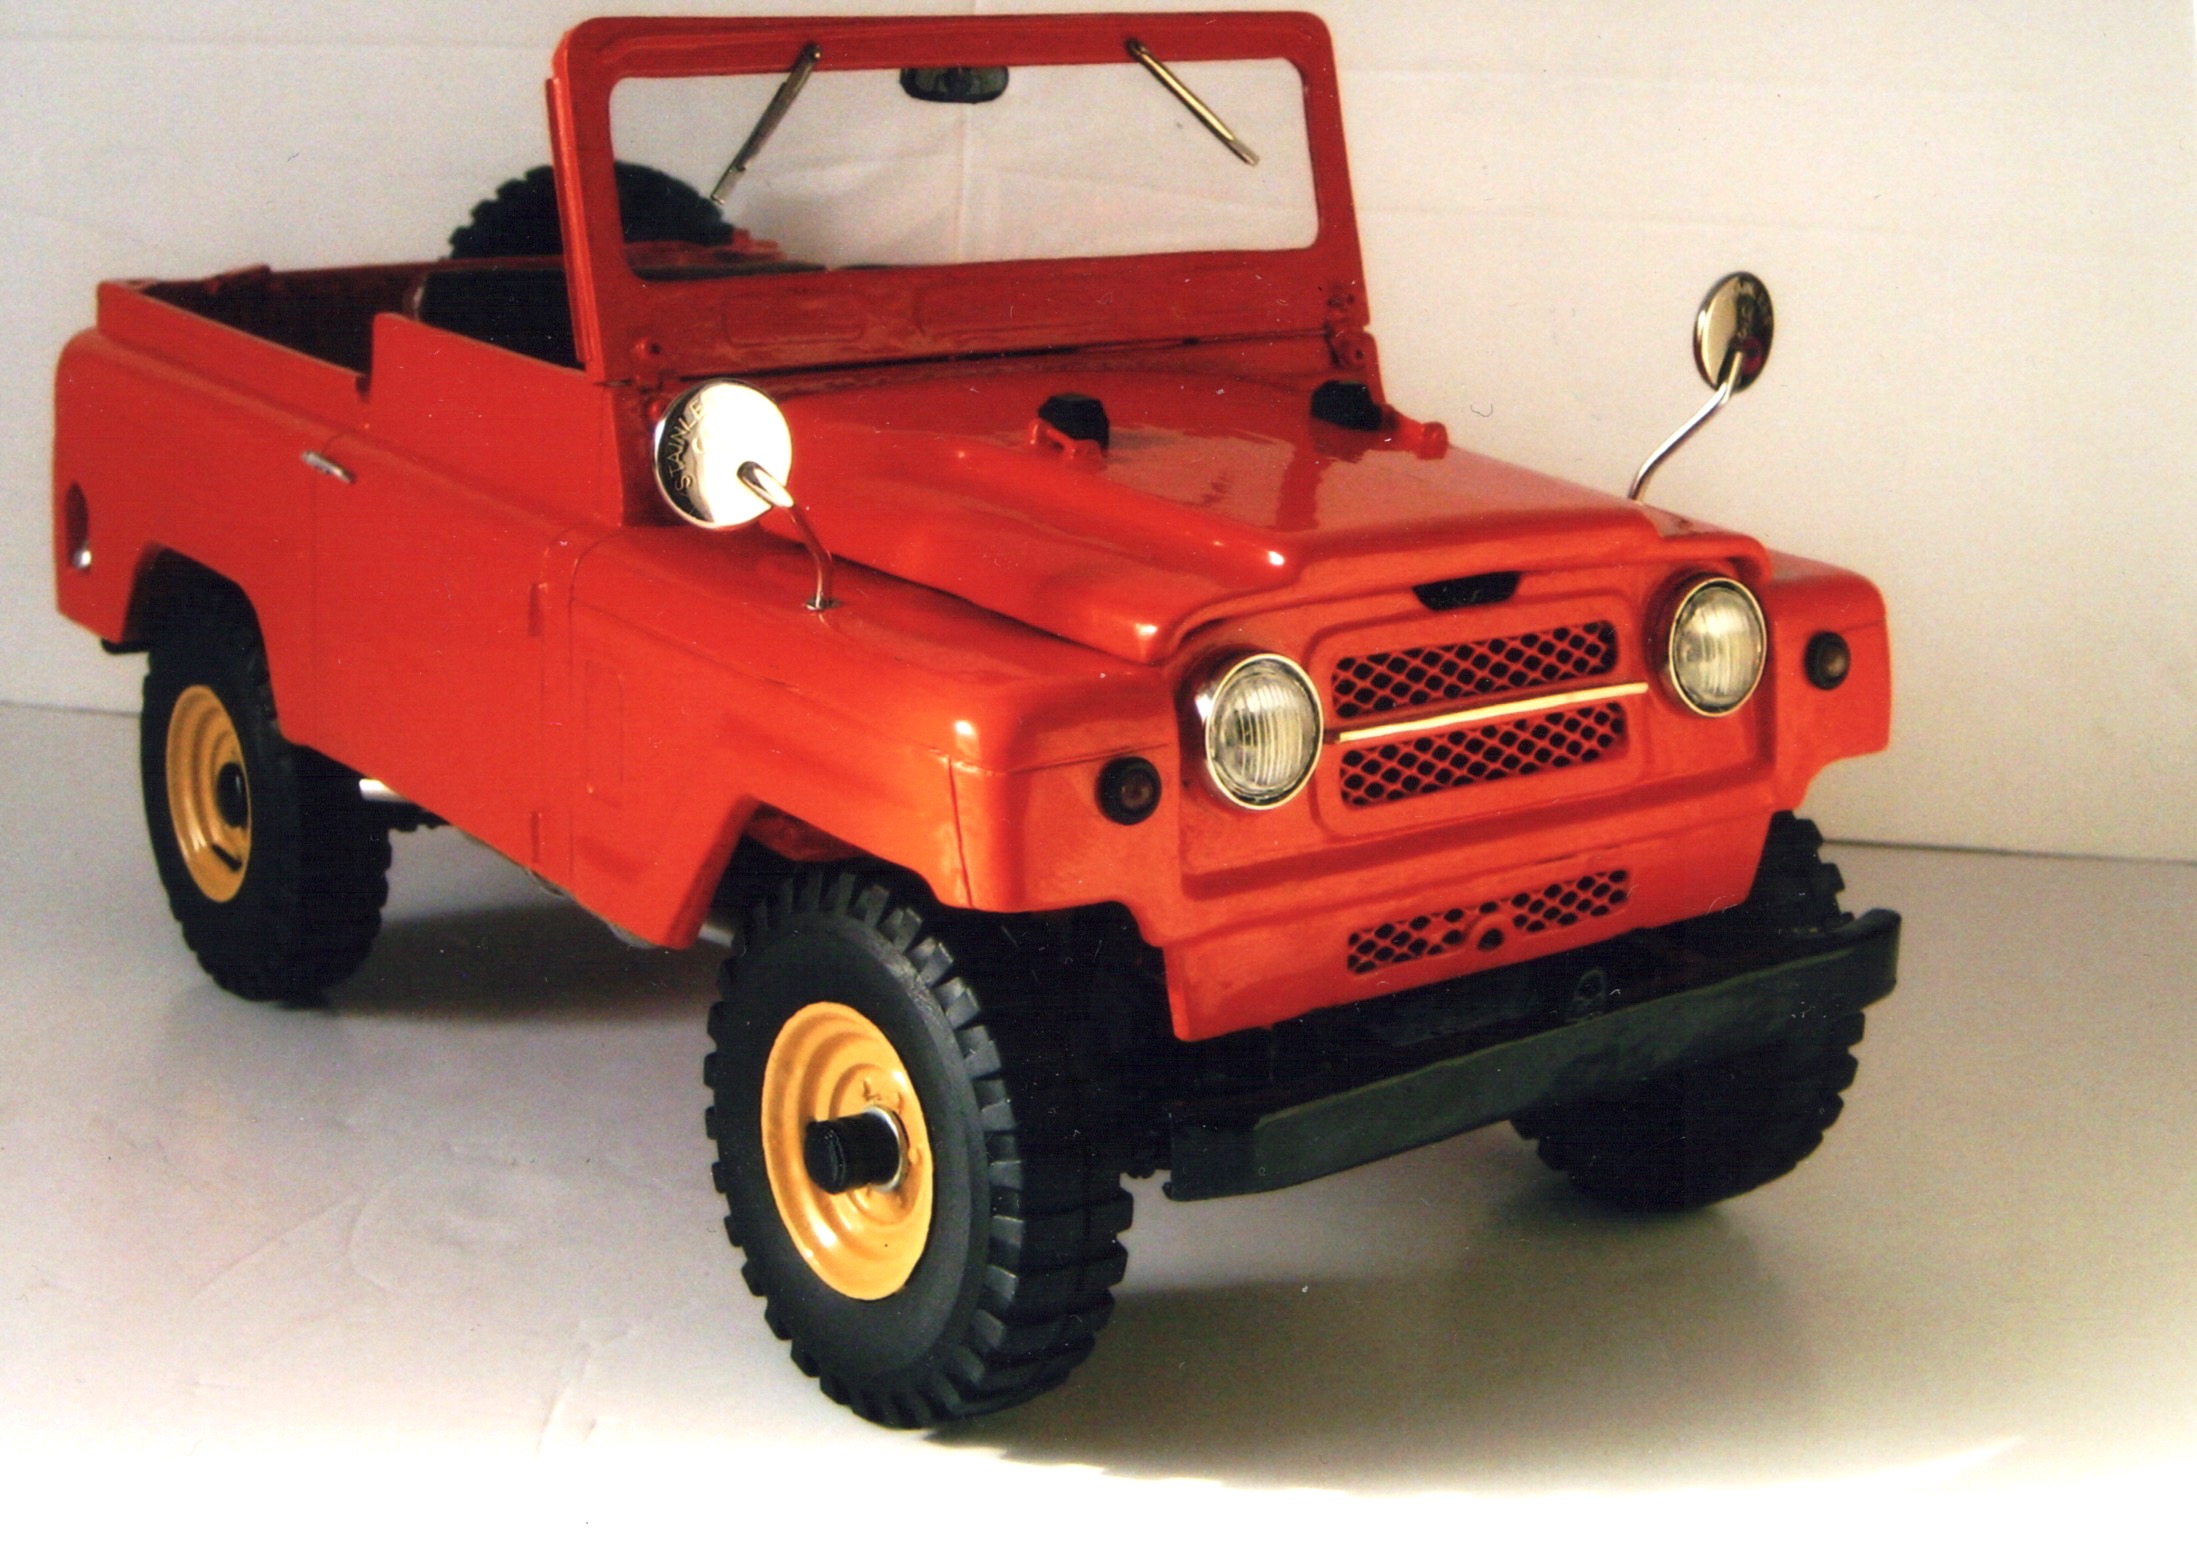 Datsun Patrol model